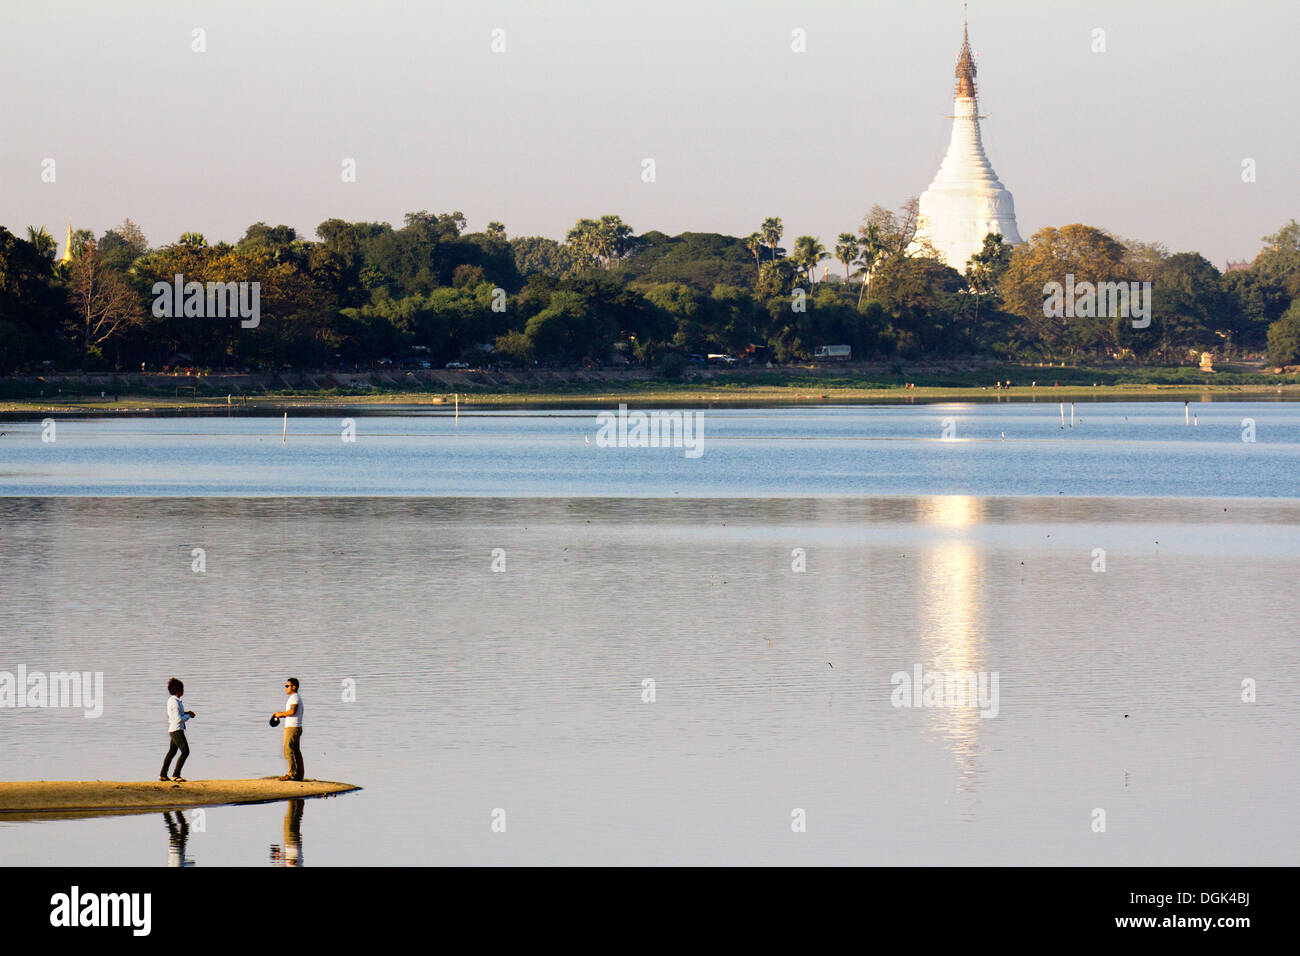 Prendendo un attimo dal lago Taungthaman in Myanmar. Foto Stock